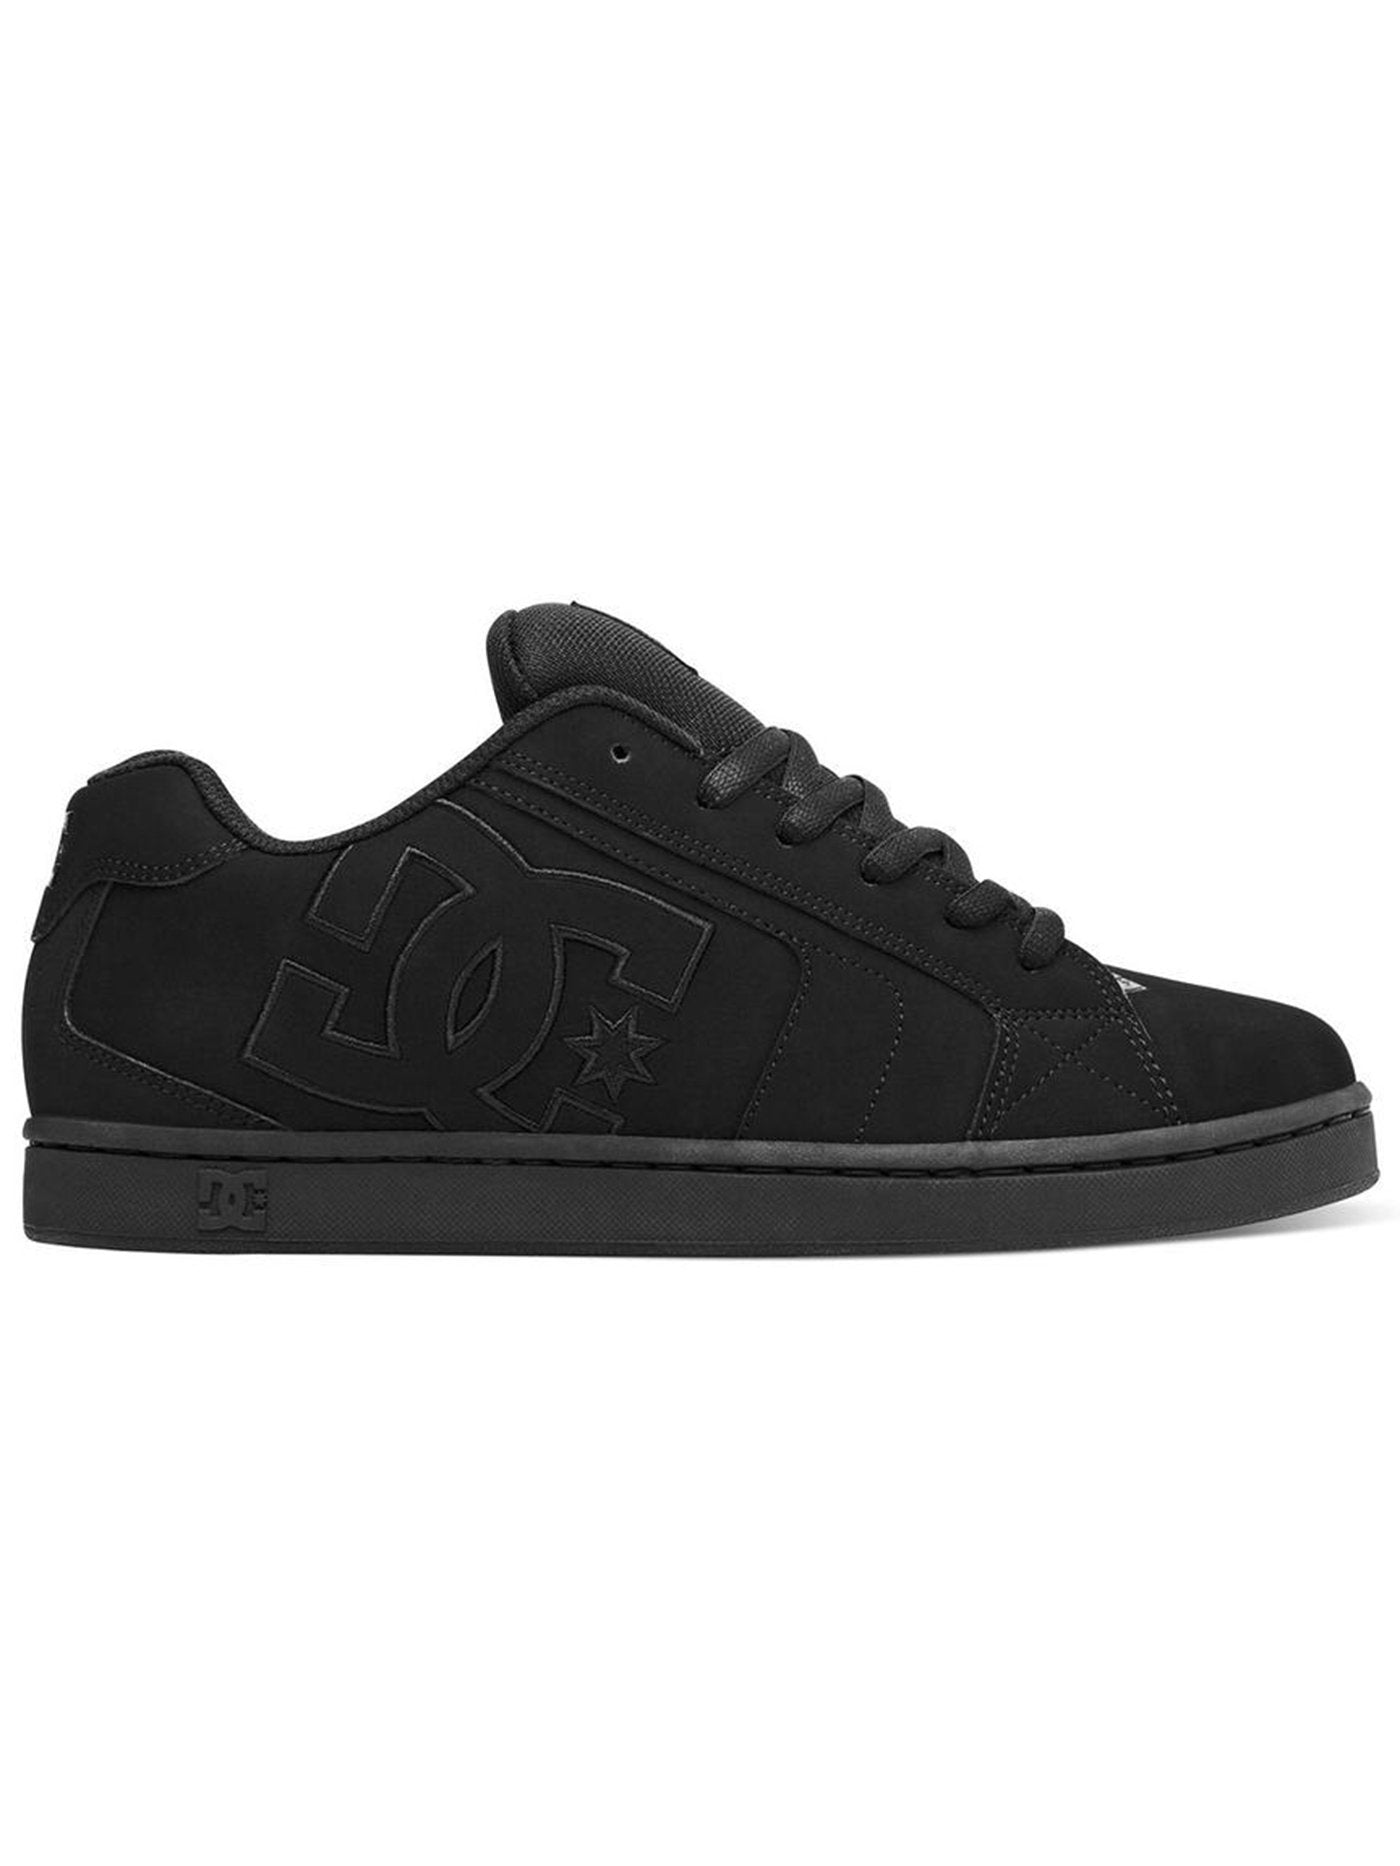 DC Net Black/Black/Black Shoes